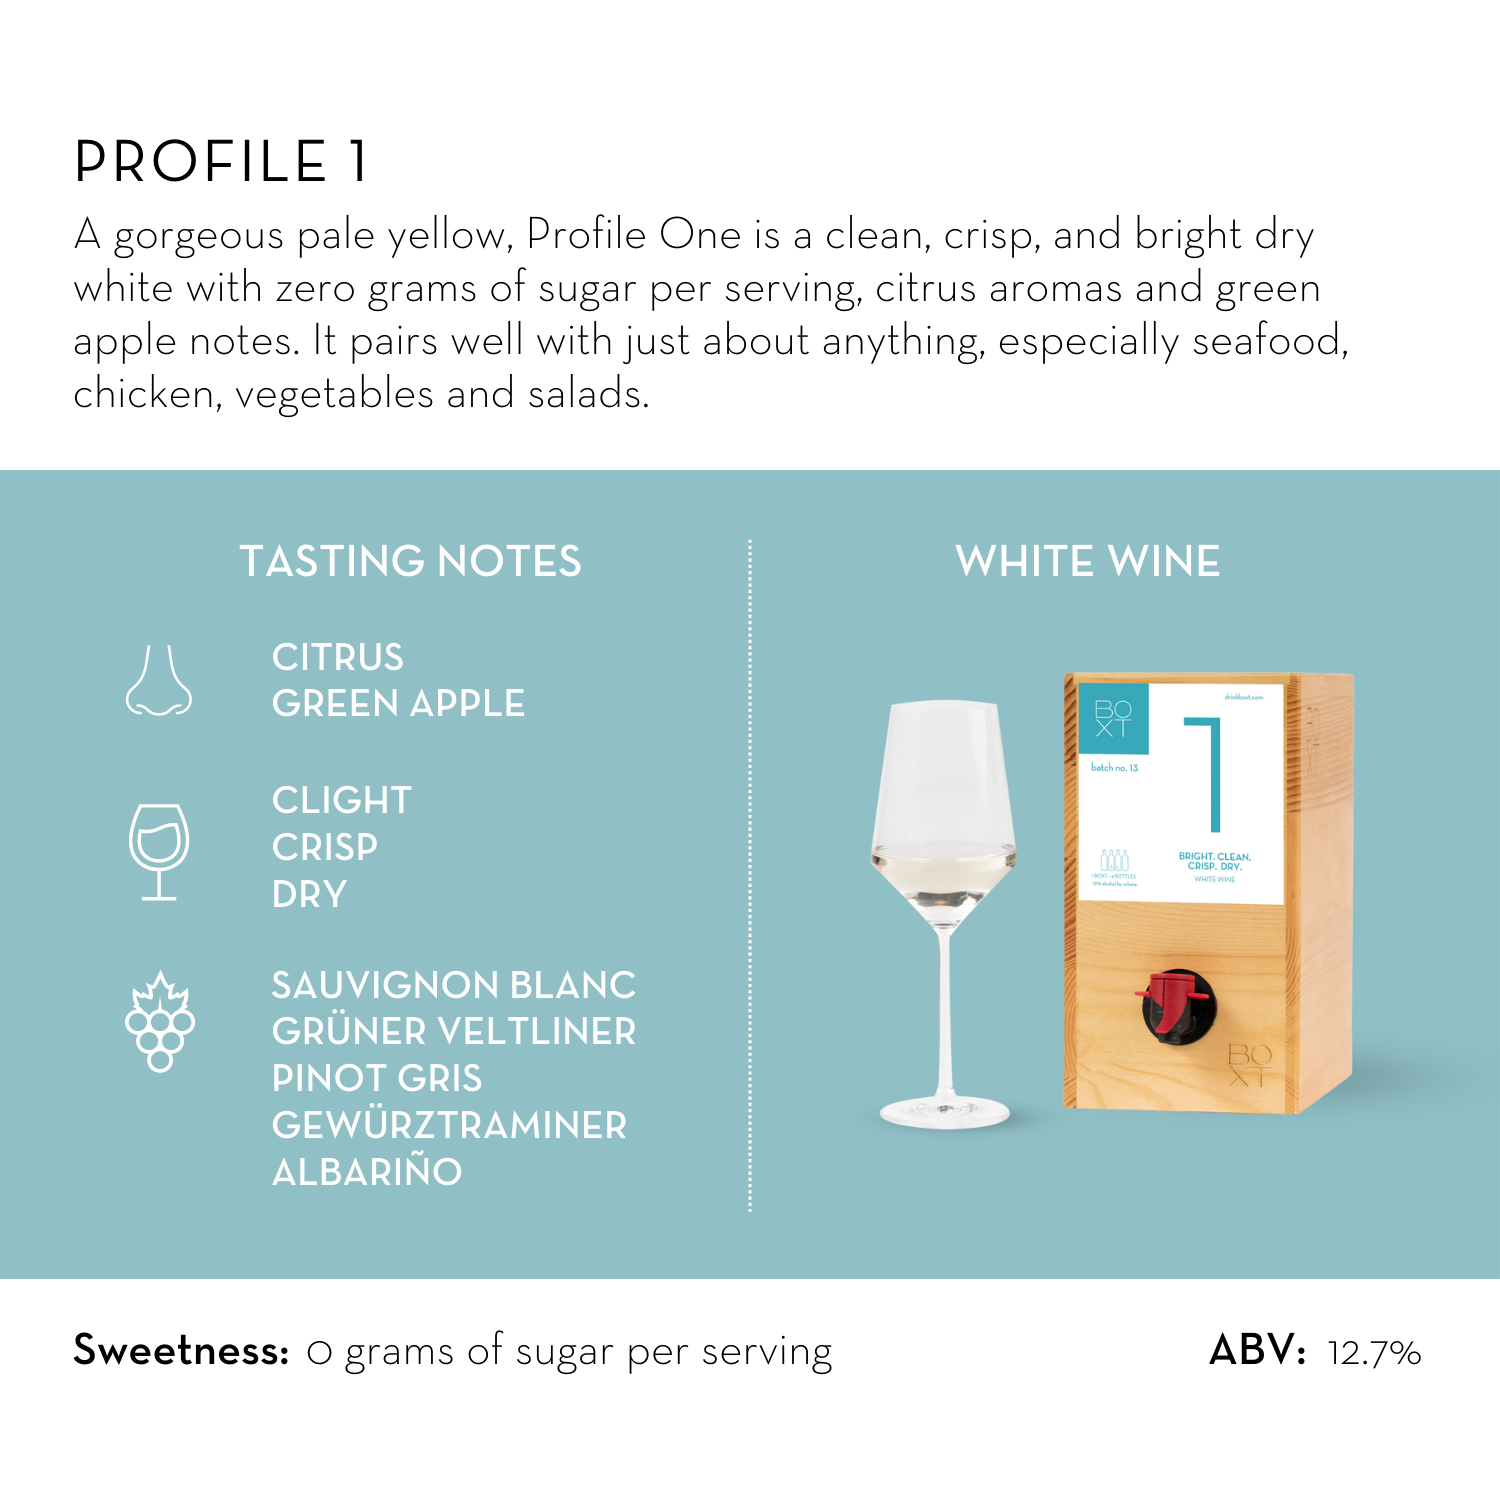 @drinkboxt profile one, sauvignon blanc wine